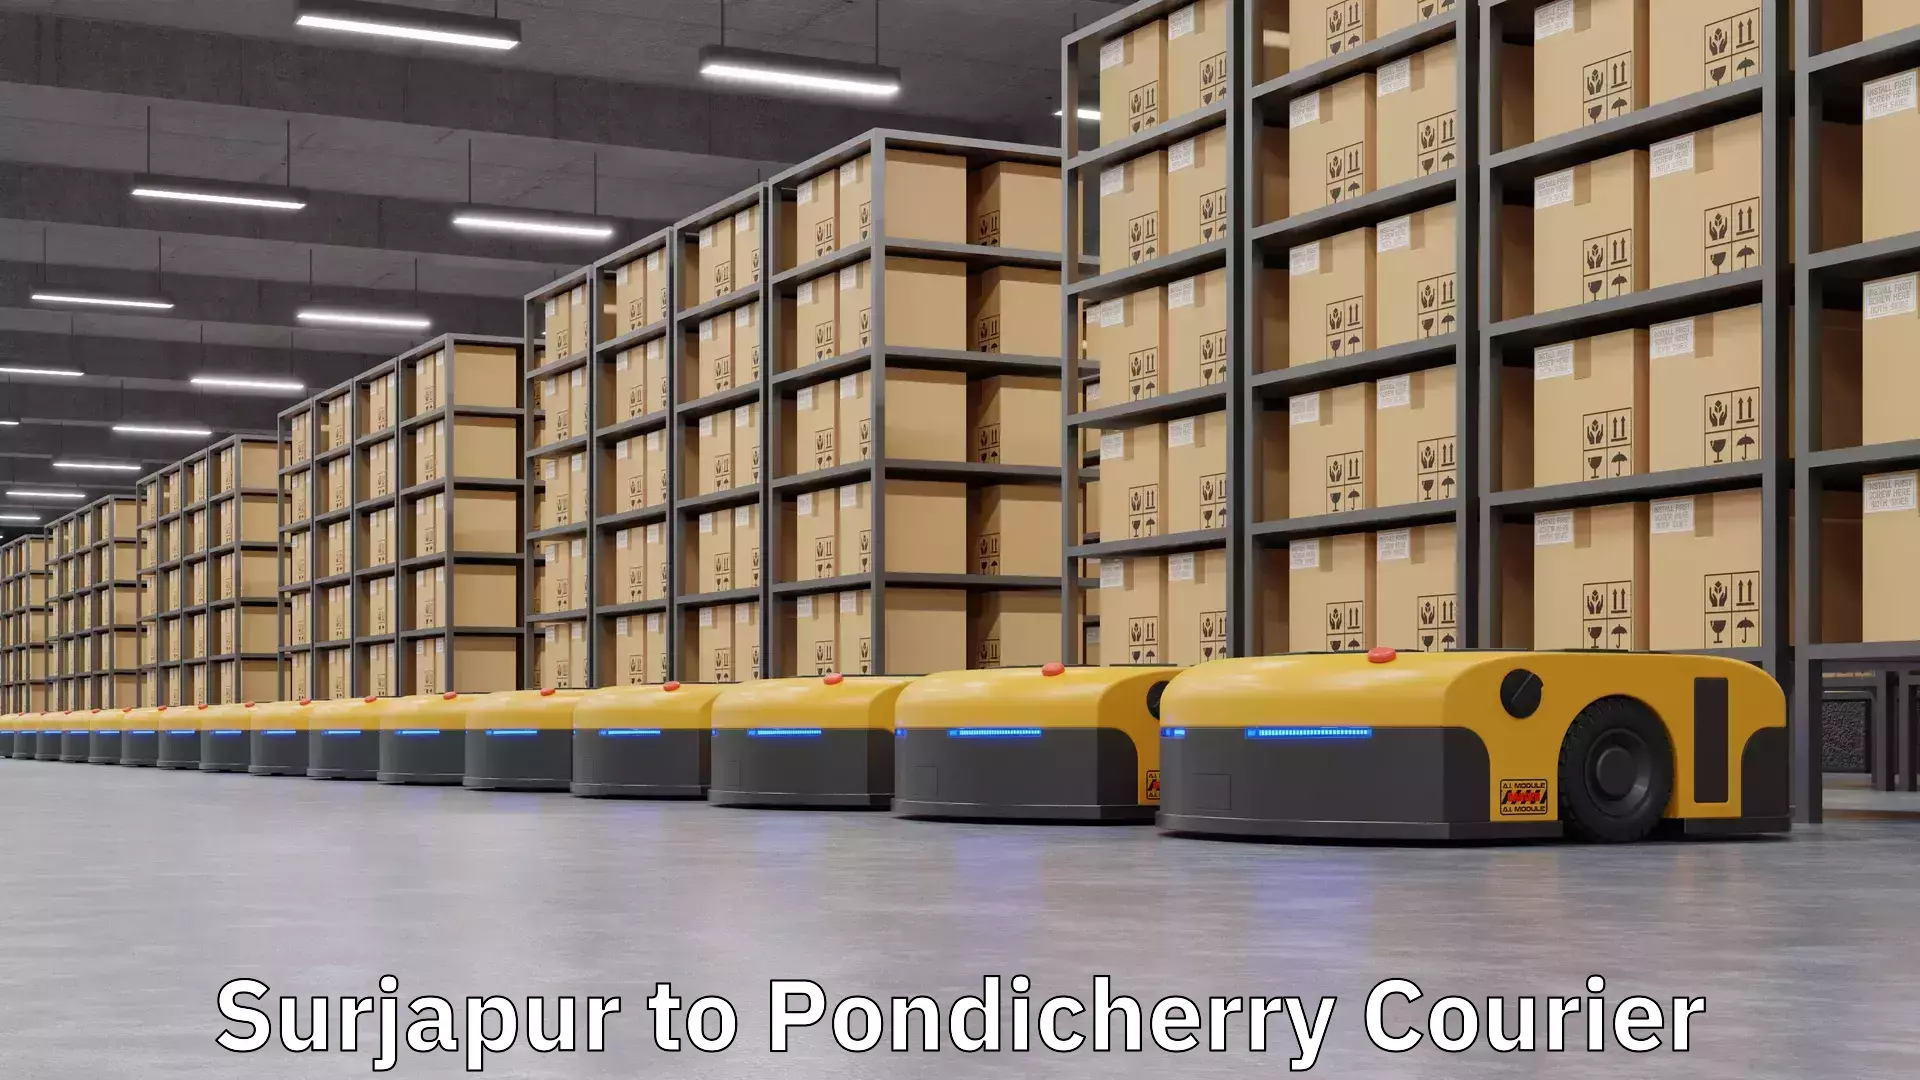 High-priority parcel service Surjapur to Pondicherry